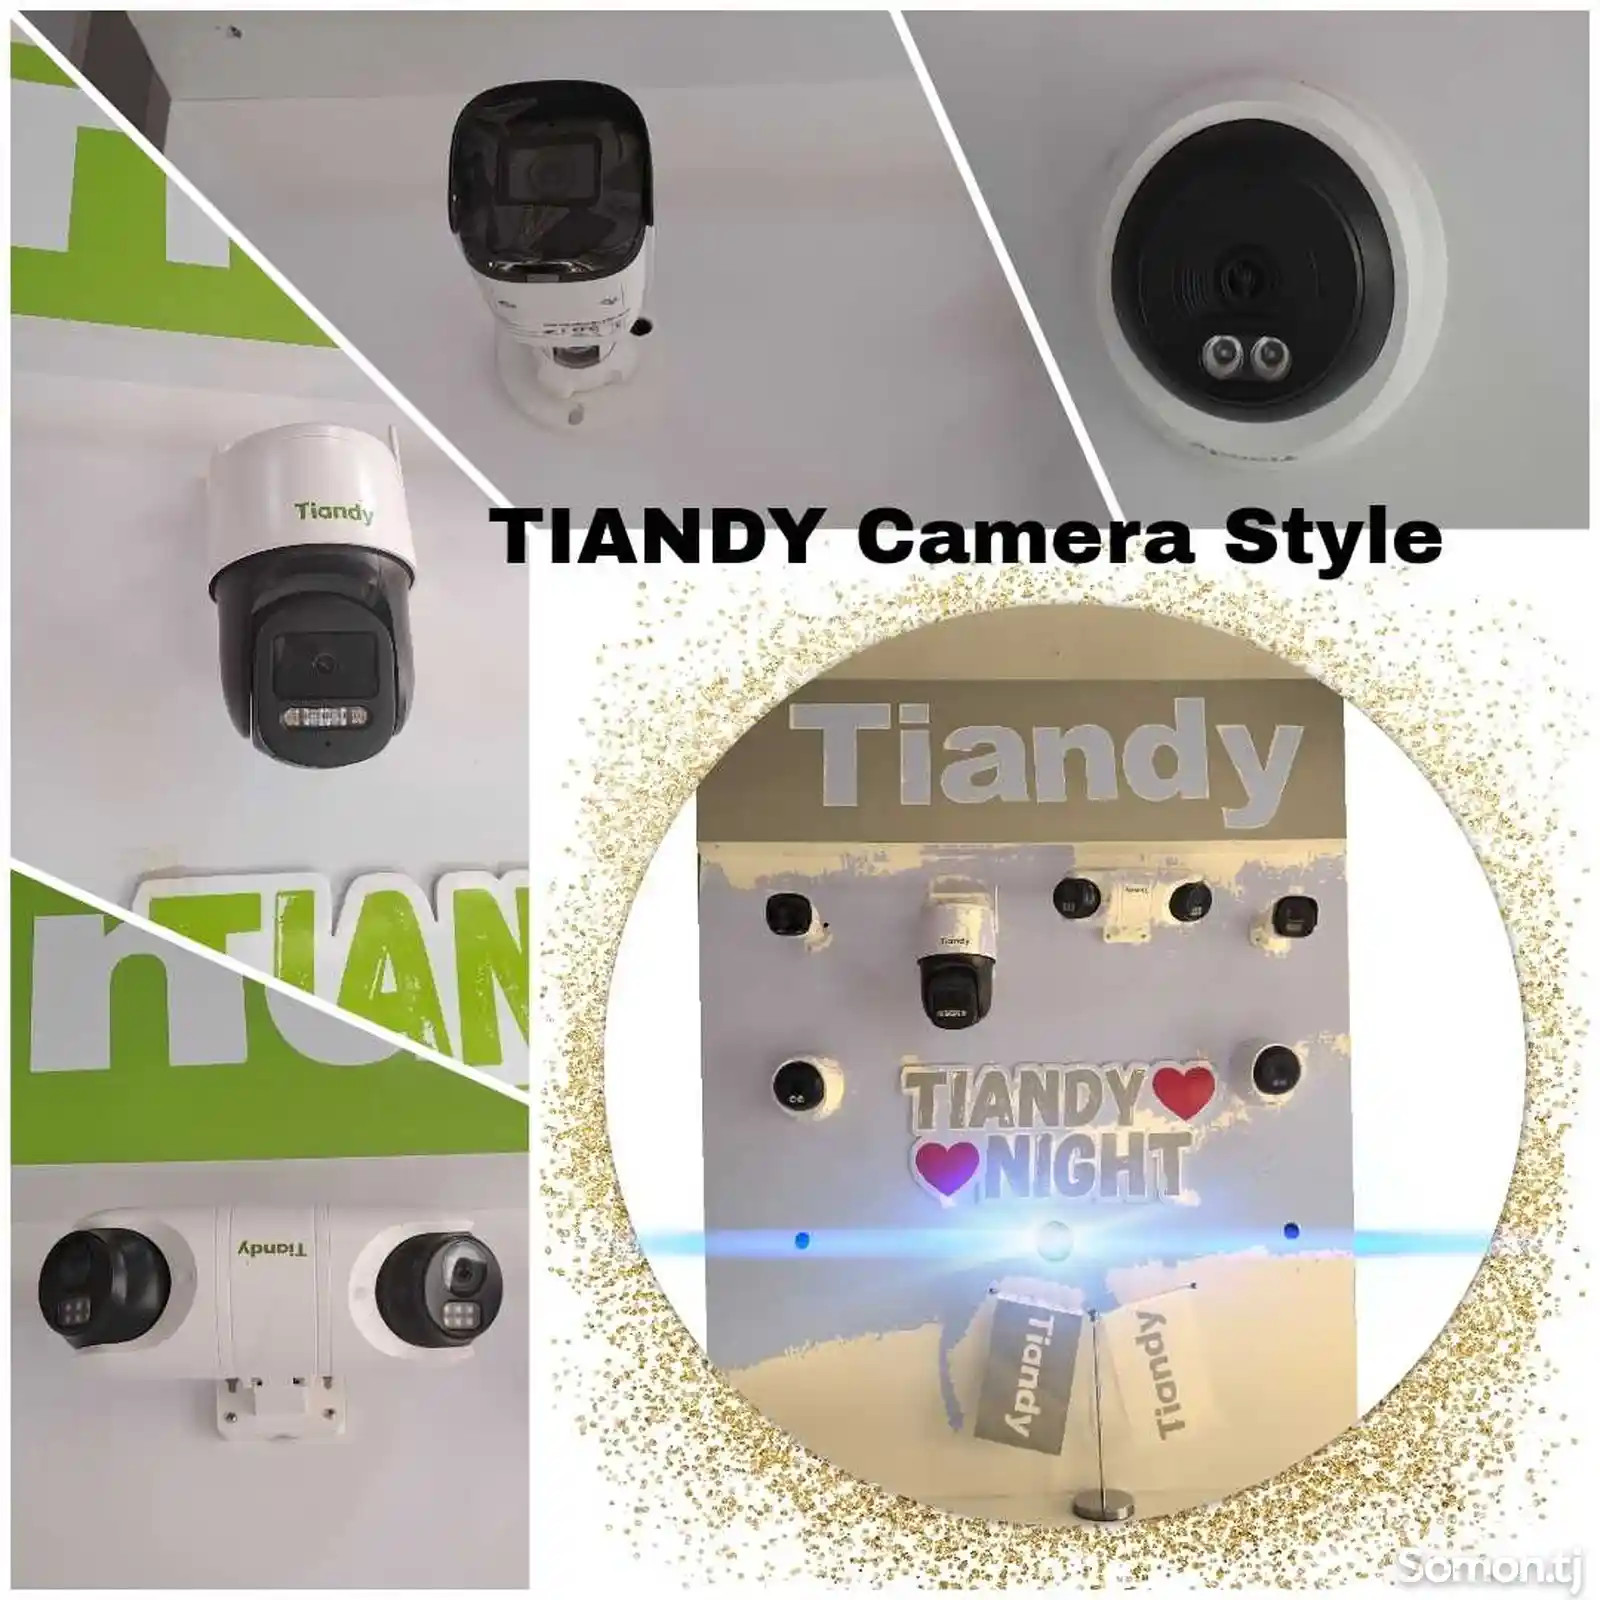 Tiandy Camera Style-1